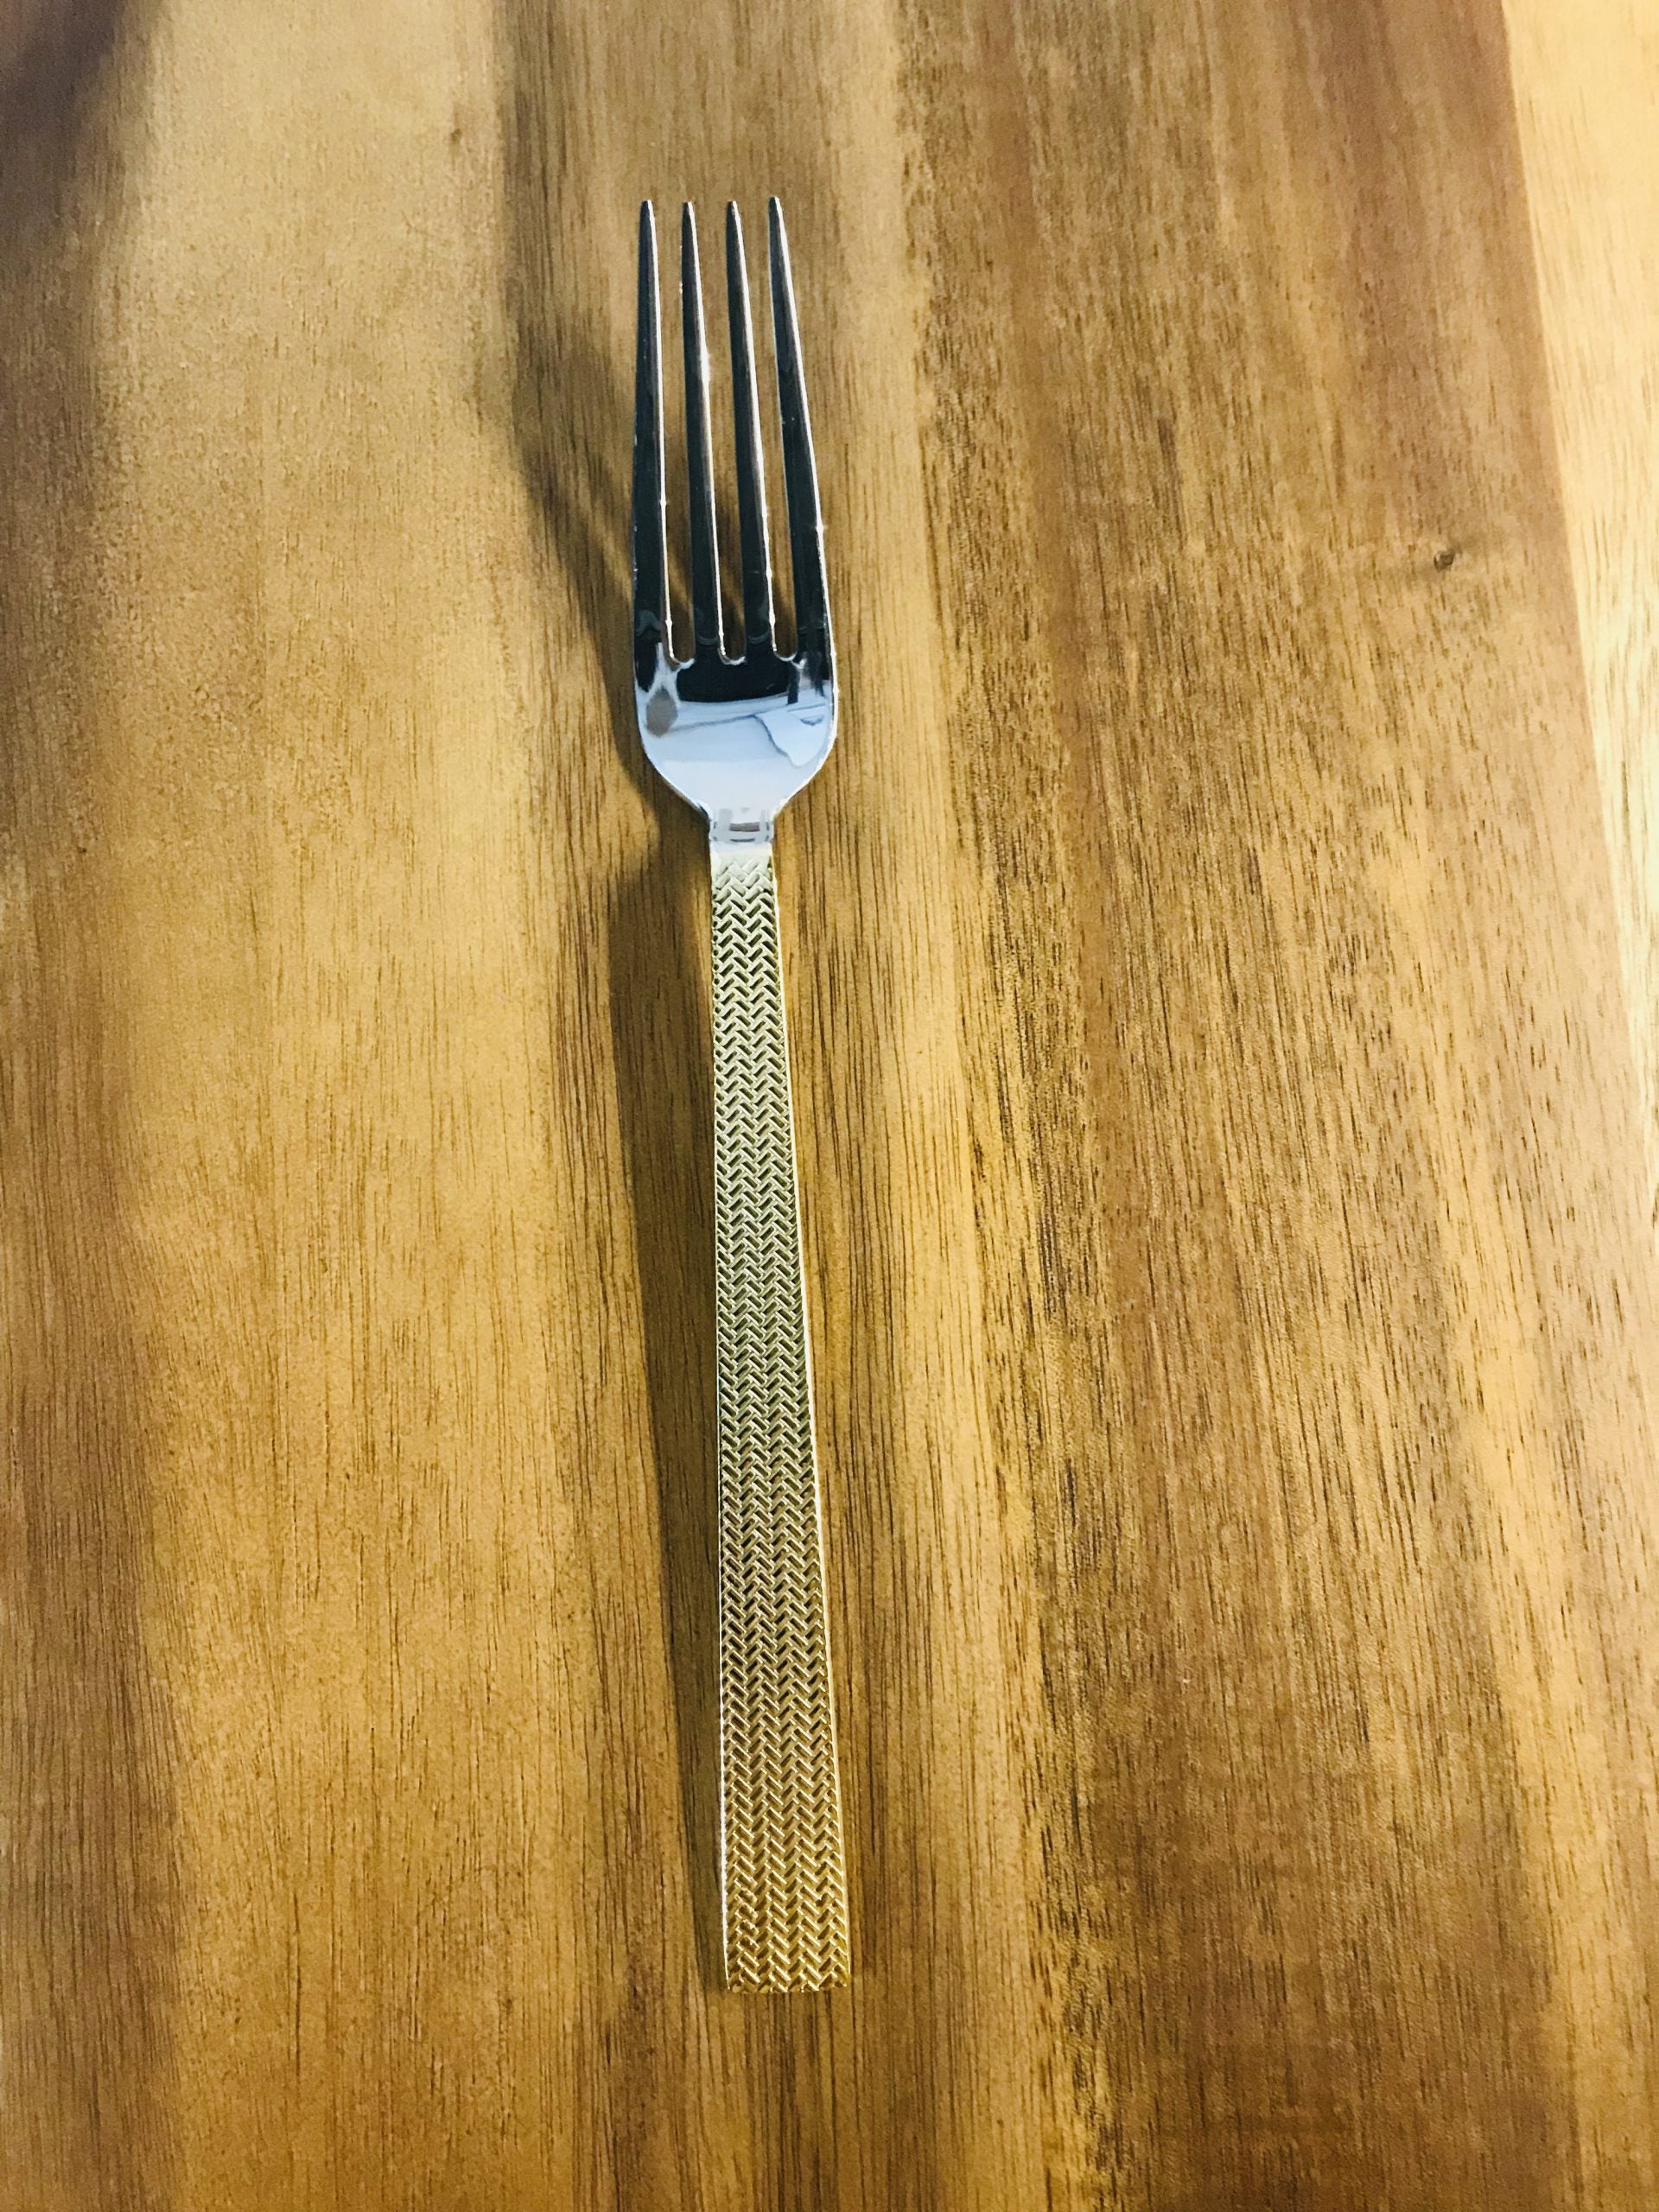 Gold handle dinner fork